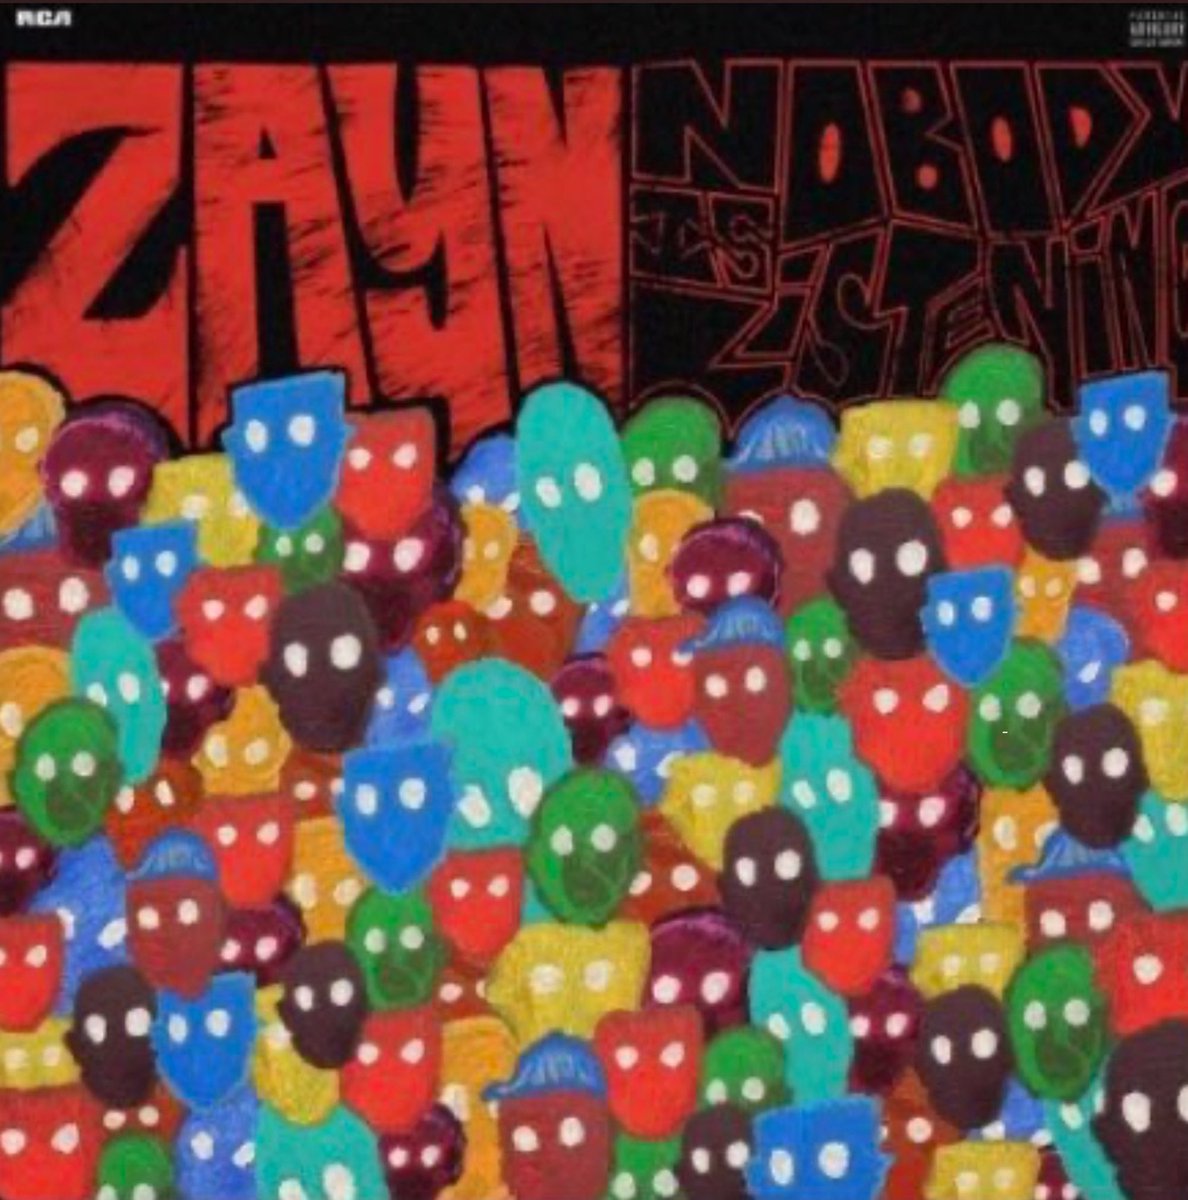 rank ZAYN’s discography